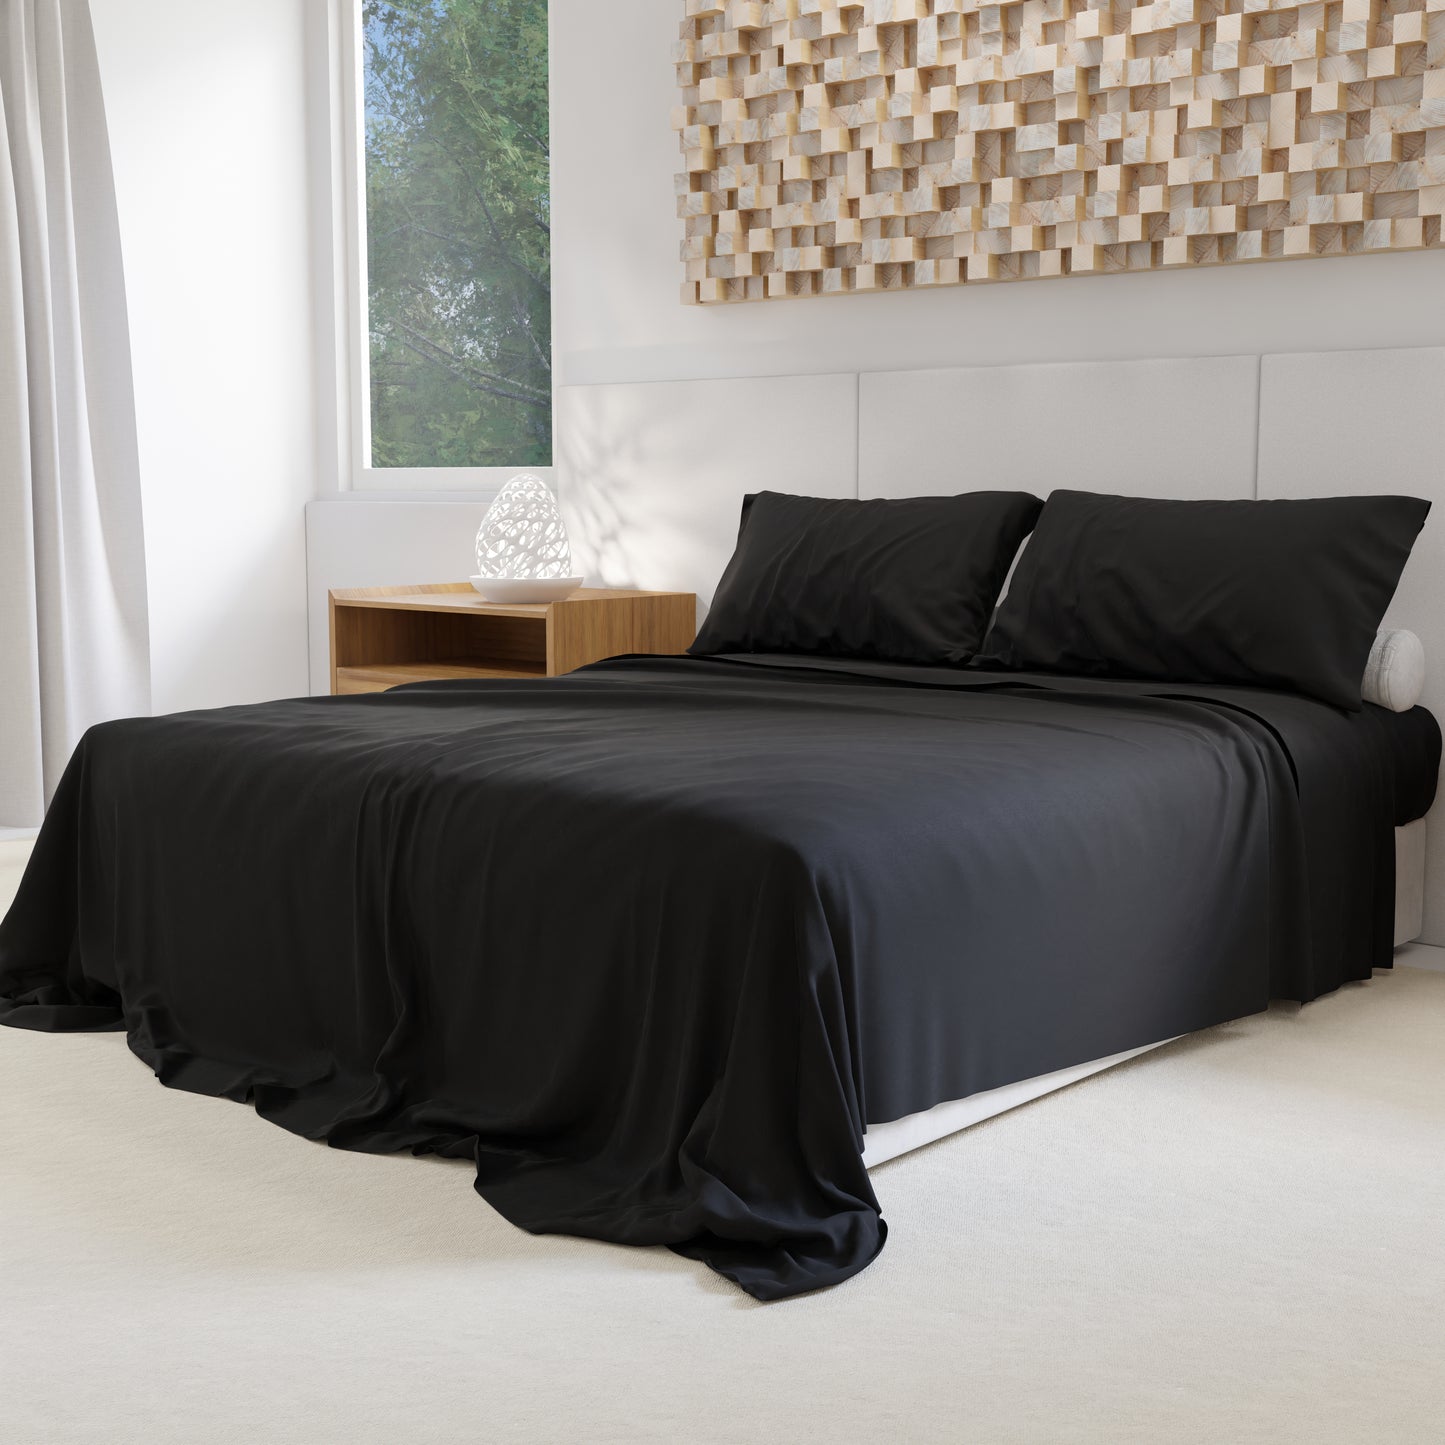 Percale sheets, Black cotton double sheets